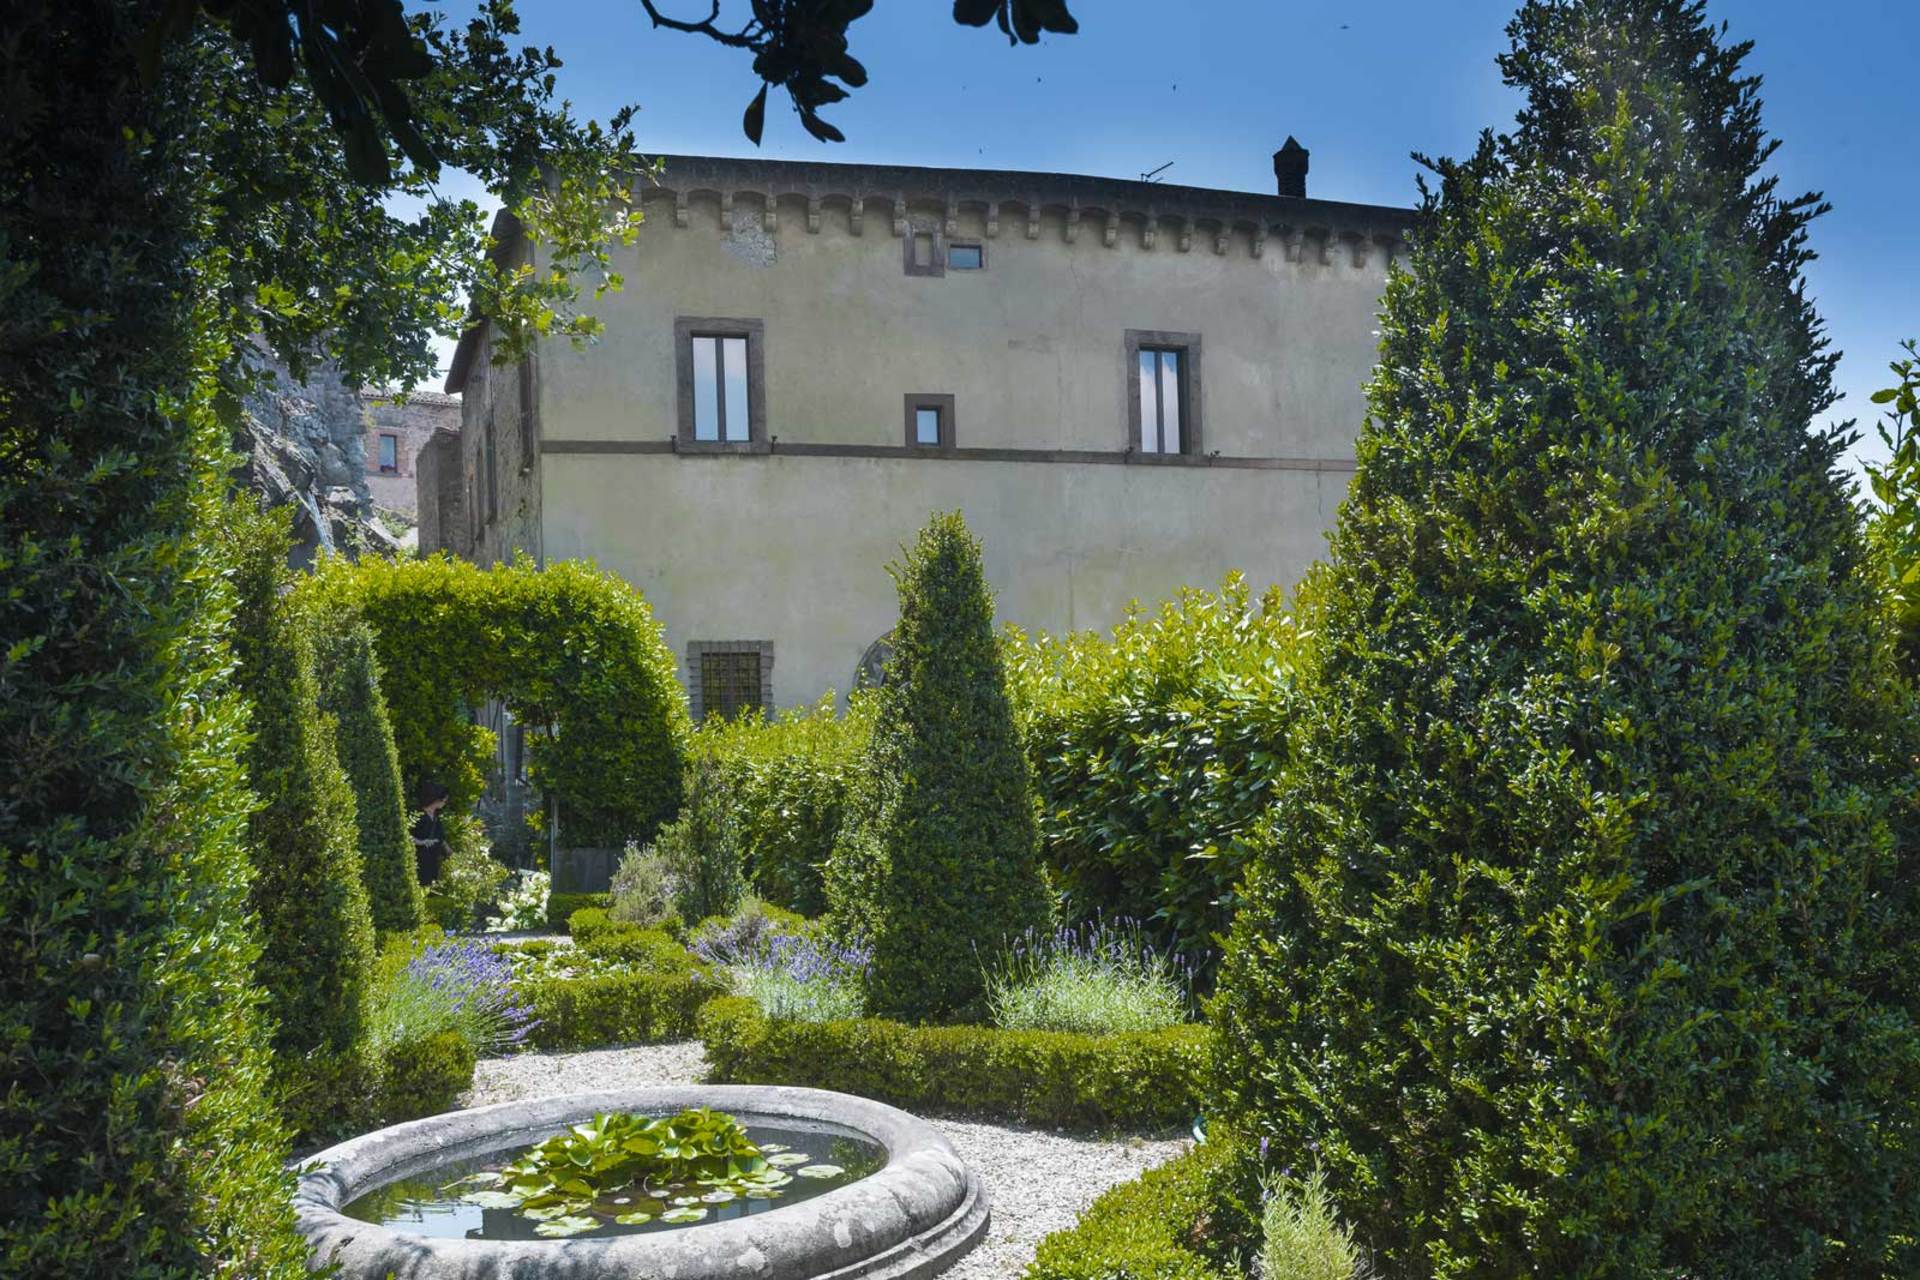 Palazzo del Drago - Garden Route